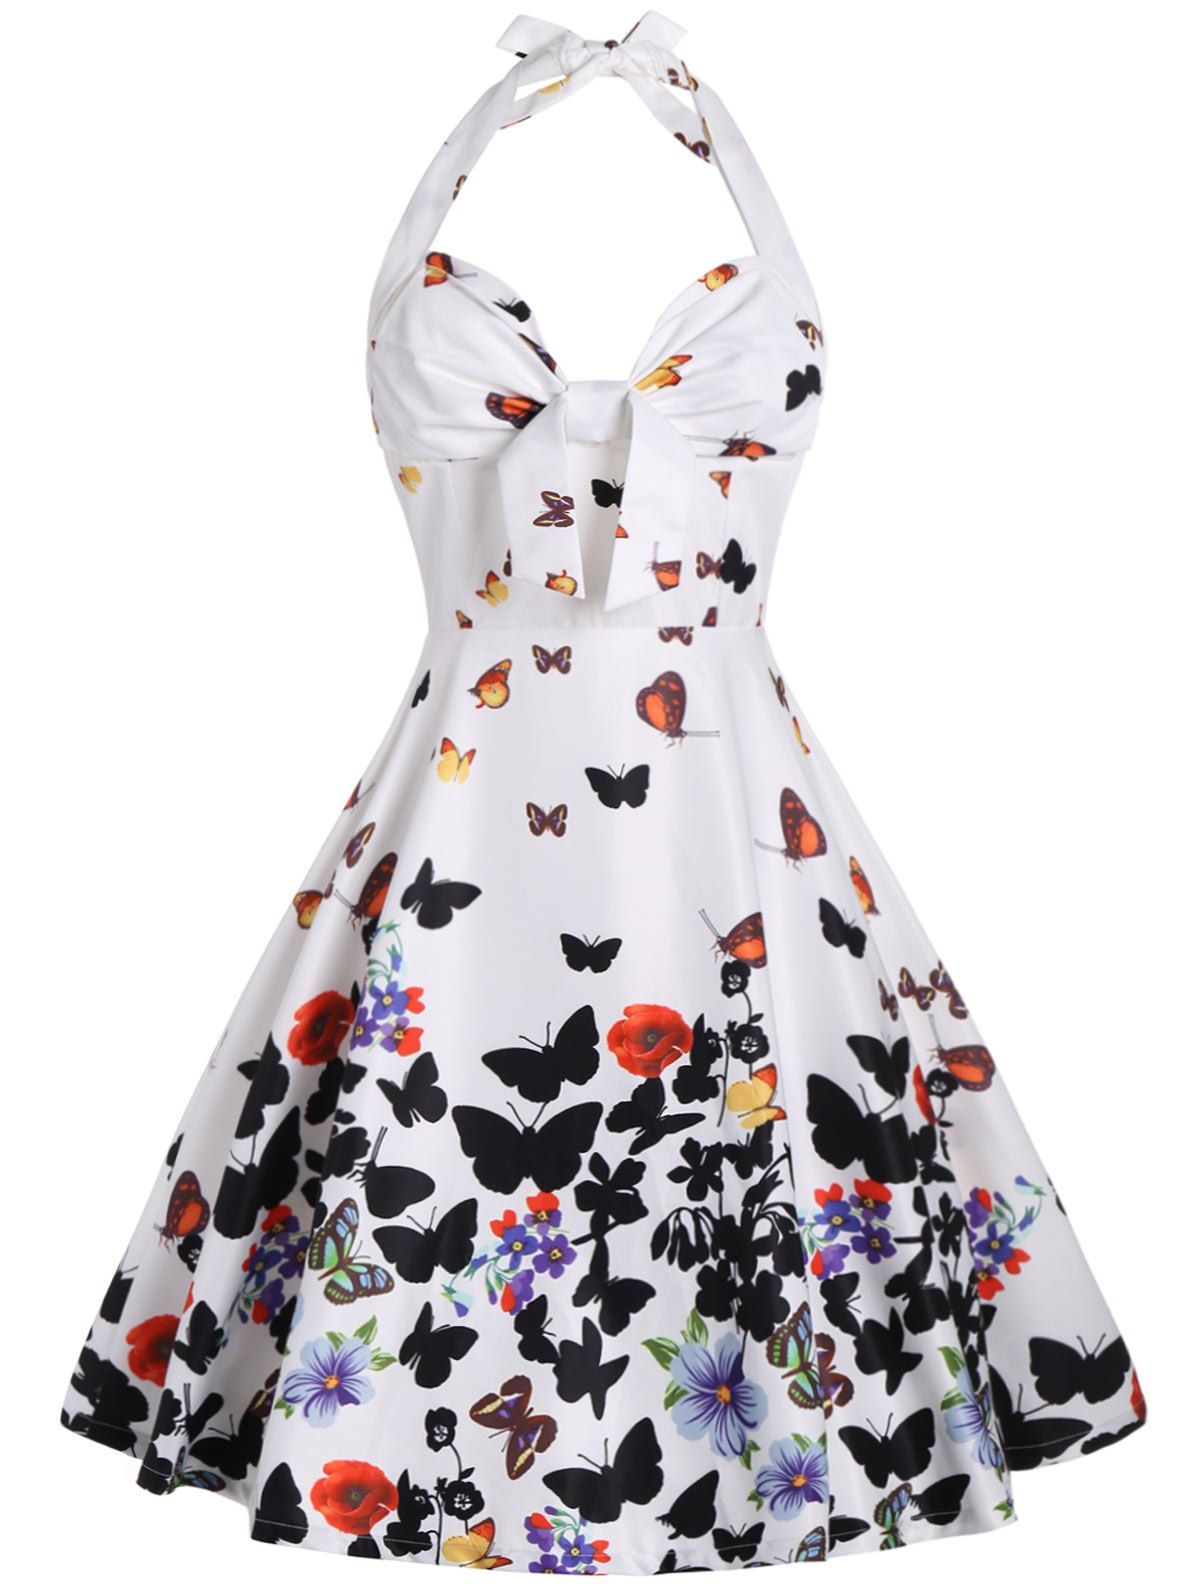 Halter Butterfly Print A Line Dress - WHITE 2XL